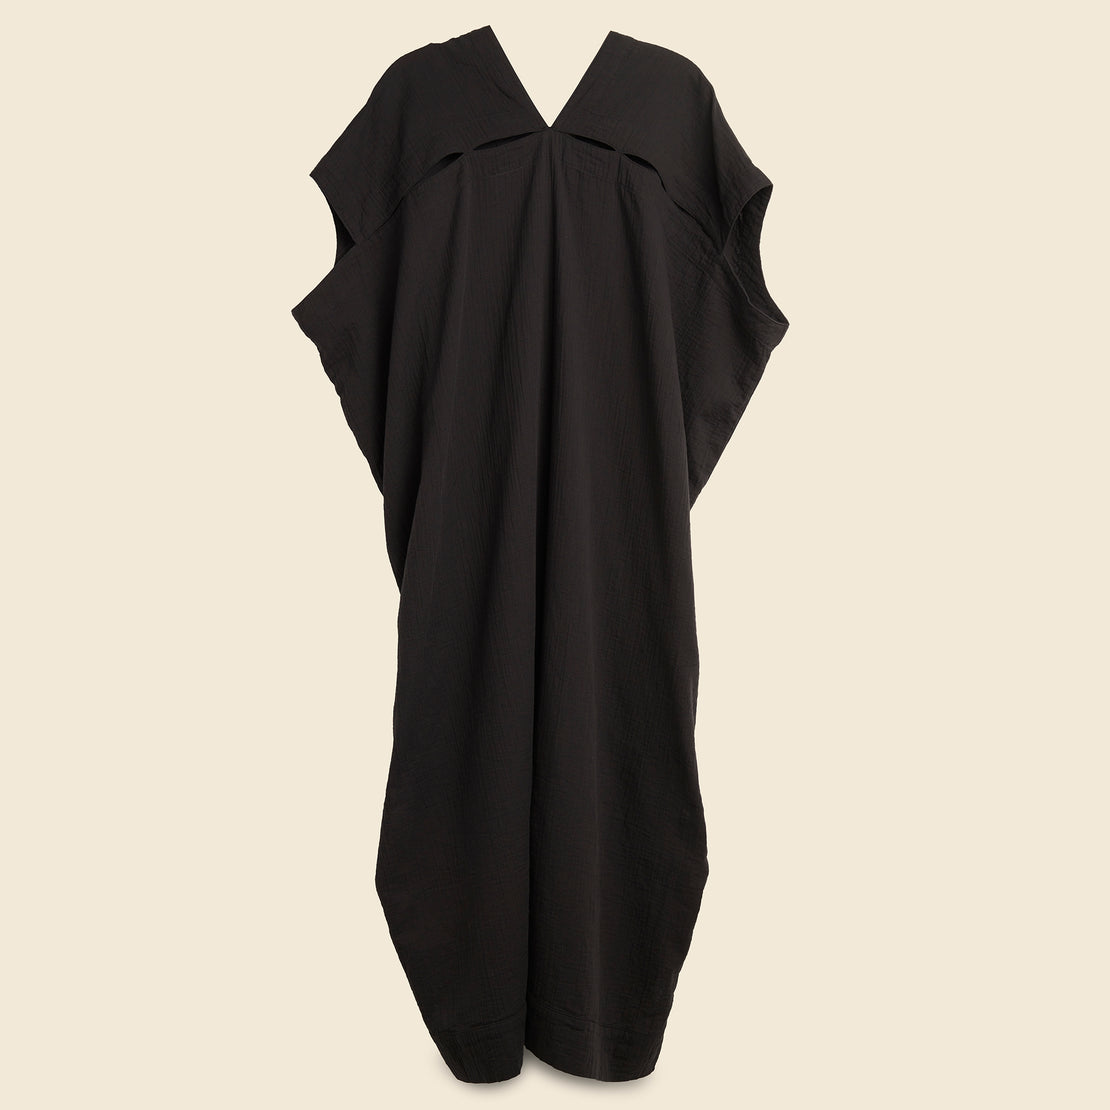 Crescent Dress -  Black - Atelier Delphine - STAG Provisions - W - Onepiece - Dress